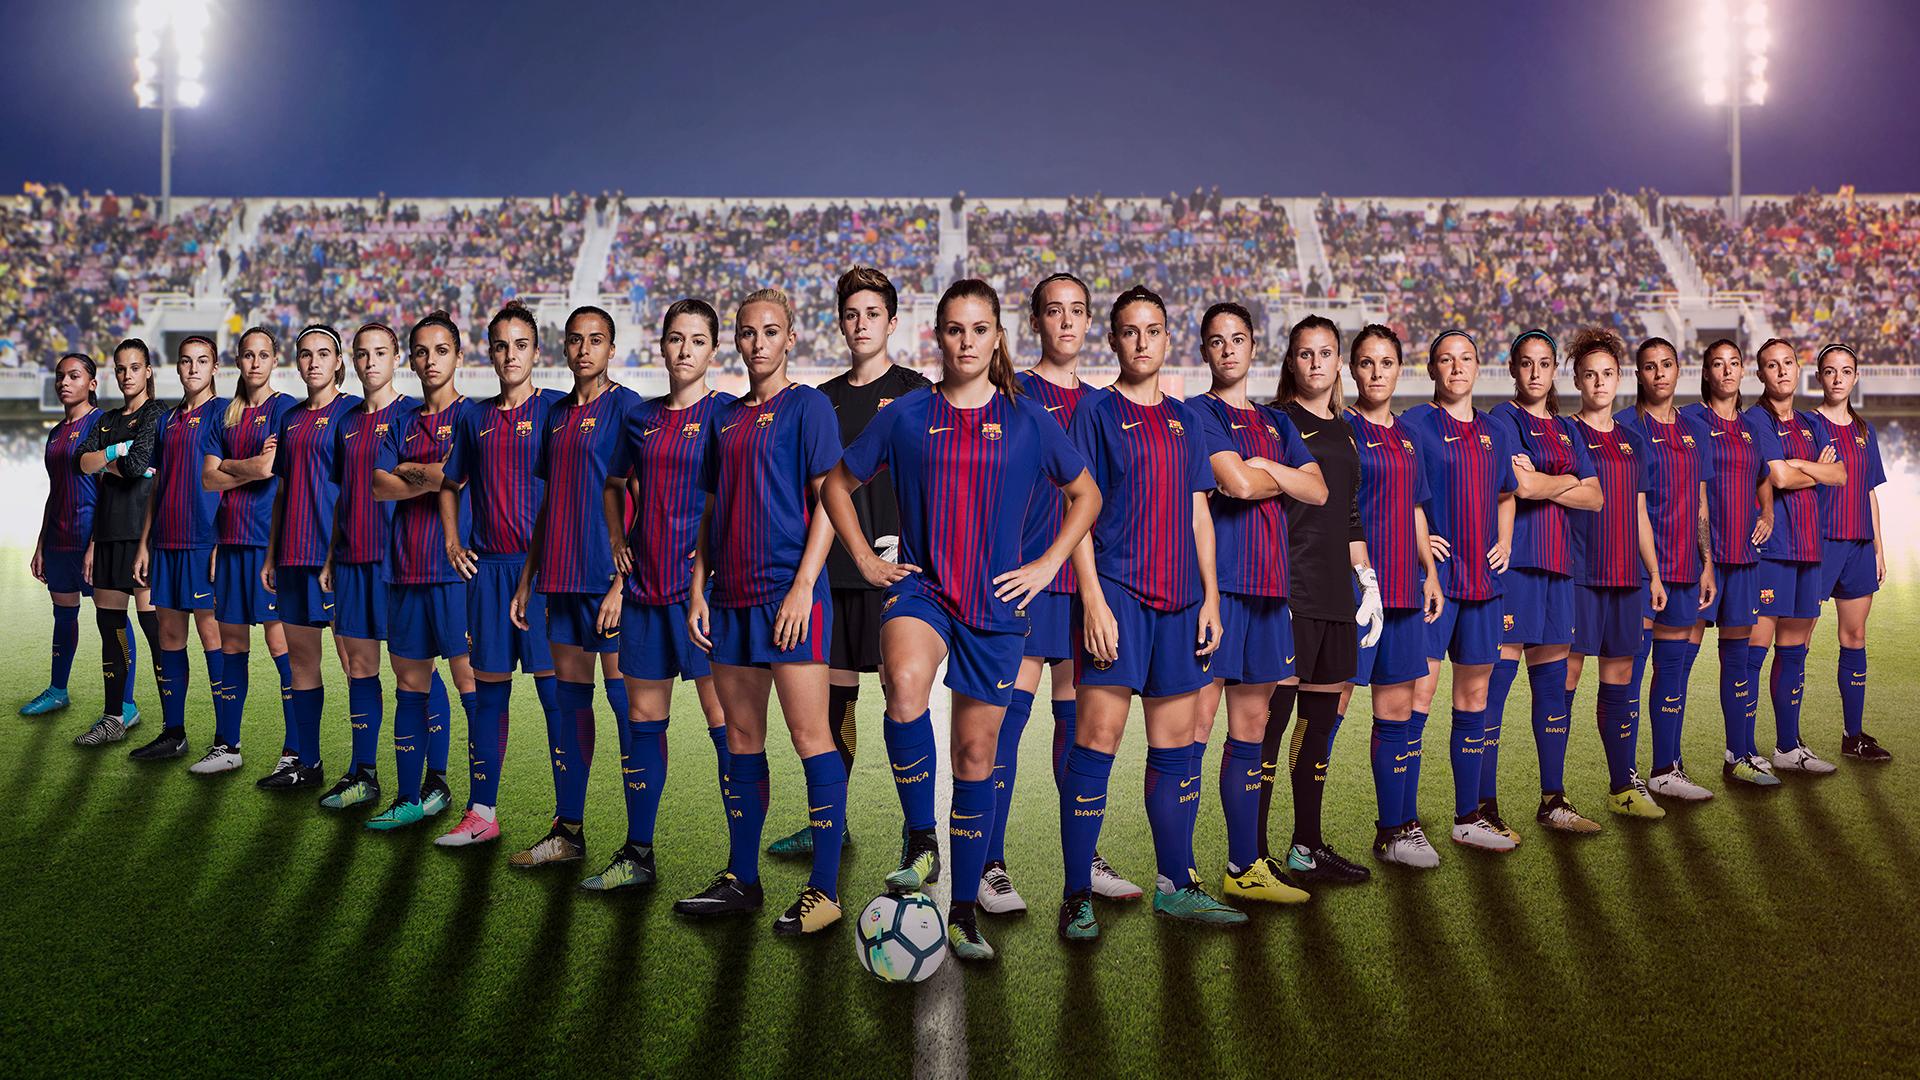 Stanley Black & Decker becomes official partner of FC Barcelona Women's Team